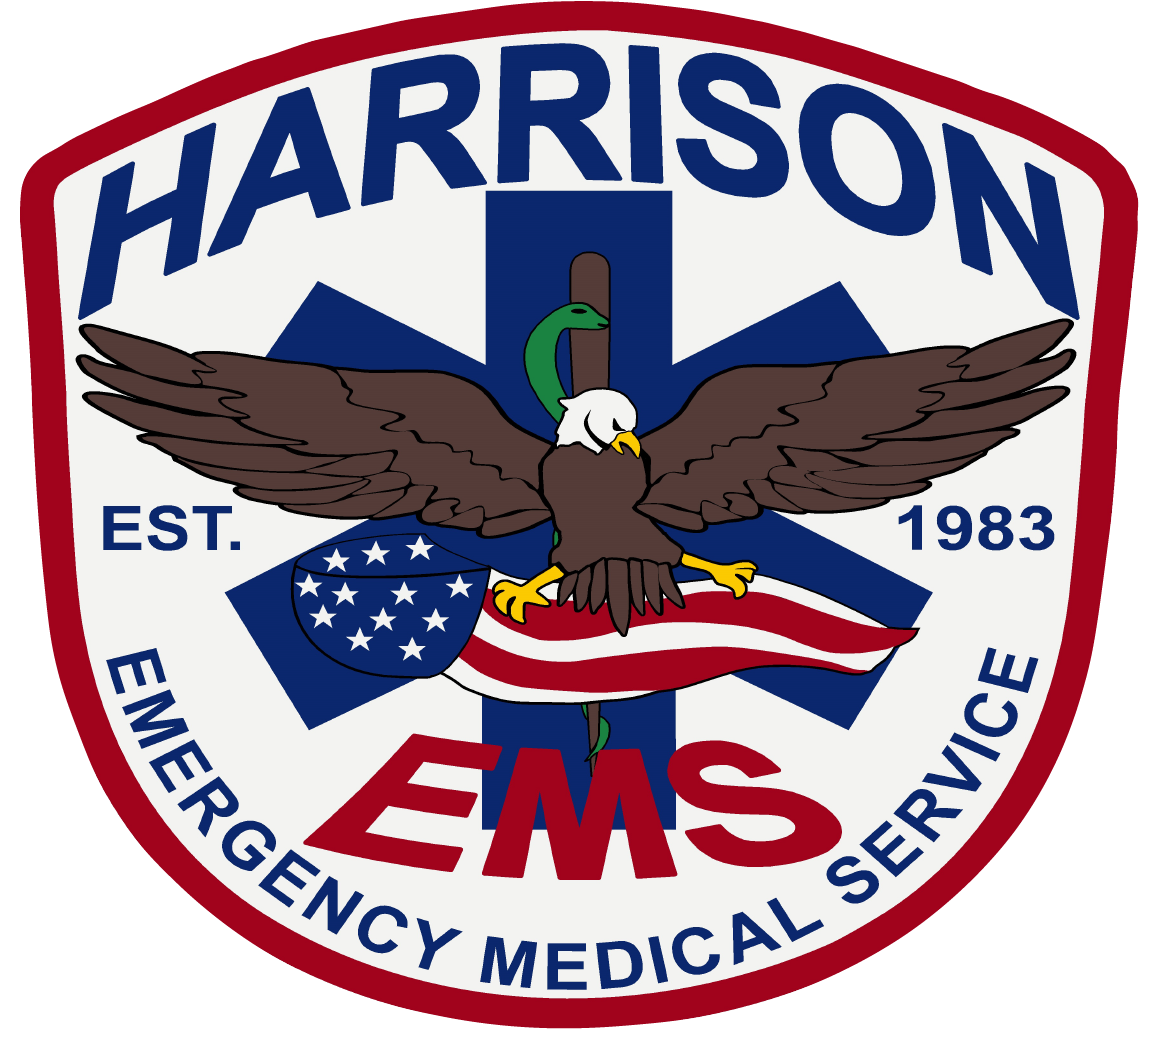 Harrison patch logo